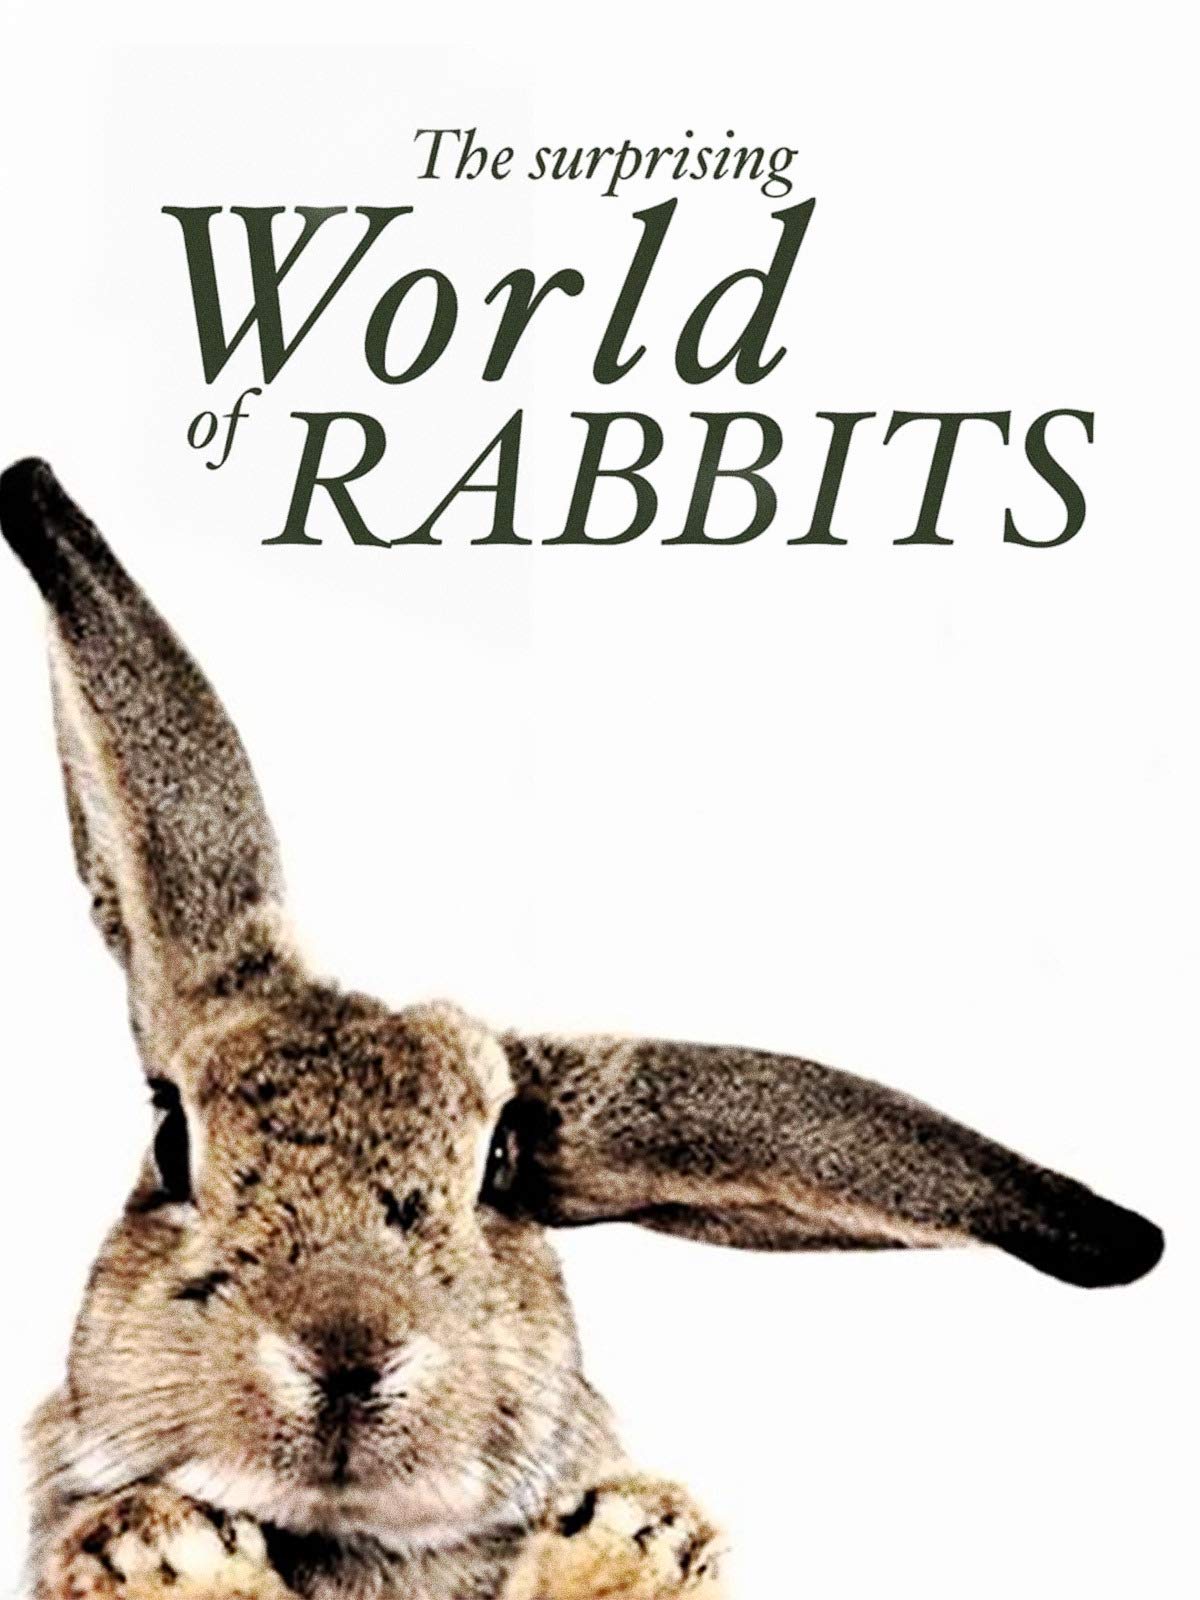 The Surprising World of Rabbits